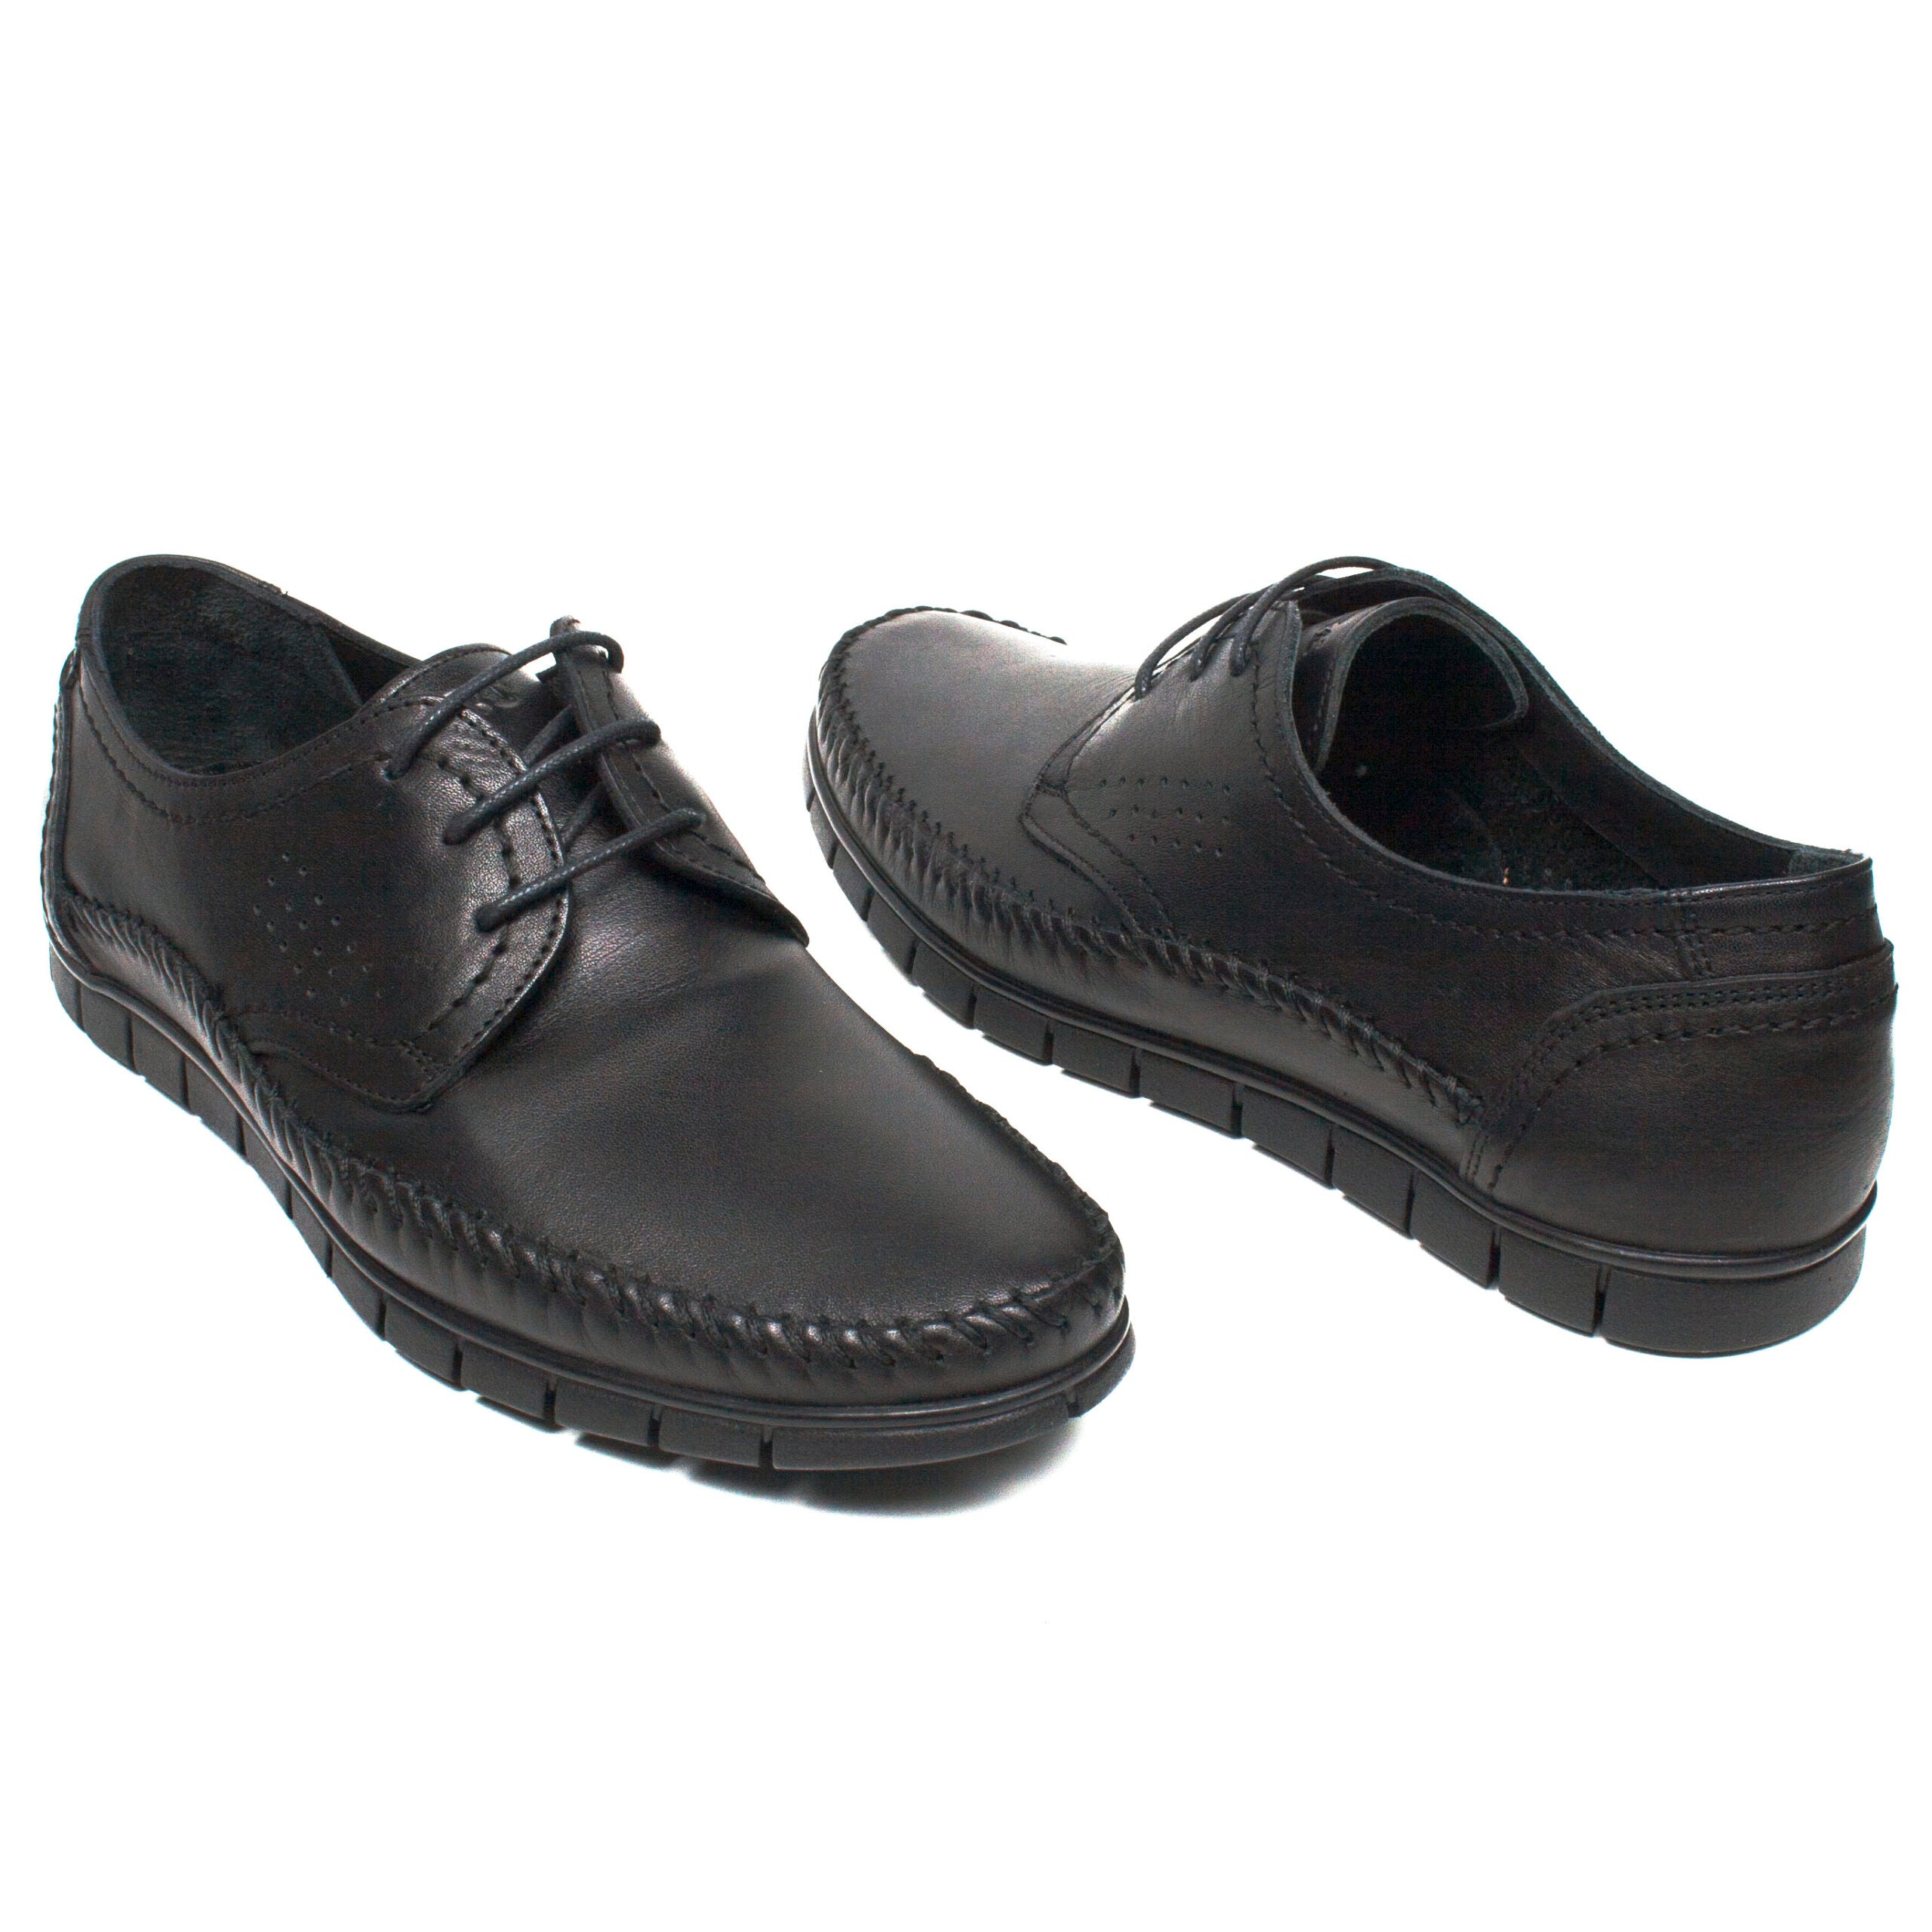 Otter pantofi barbati negru IB0585-NG